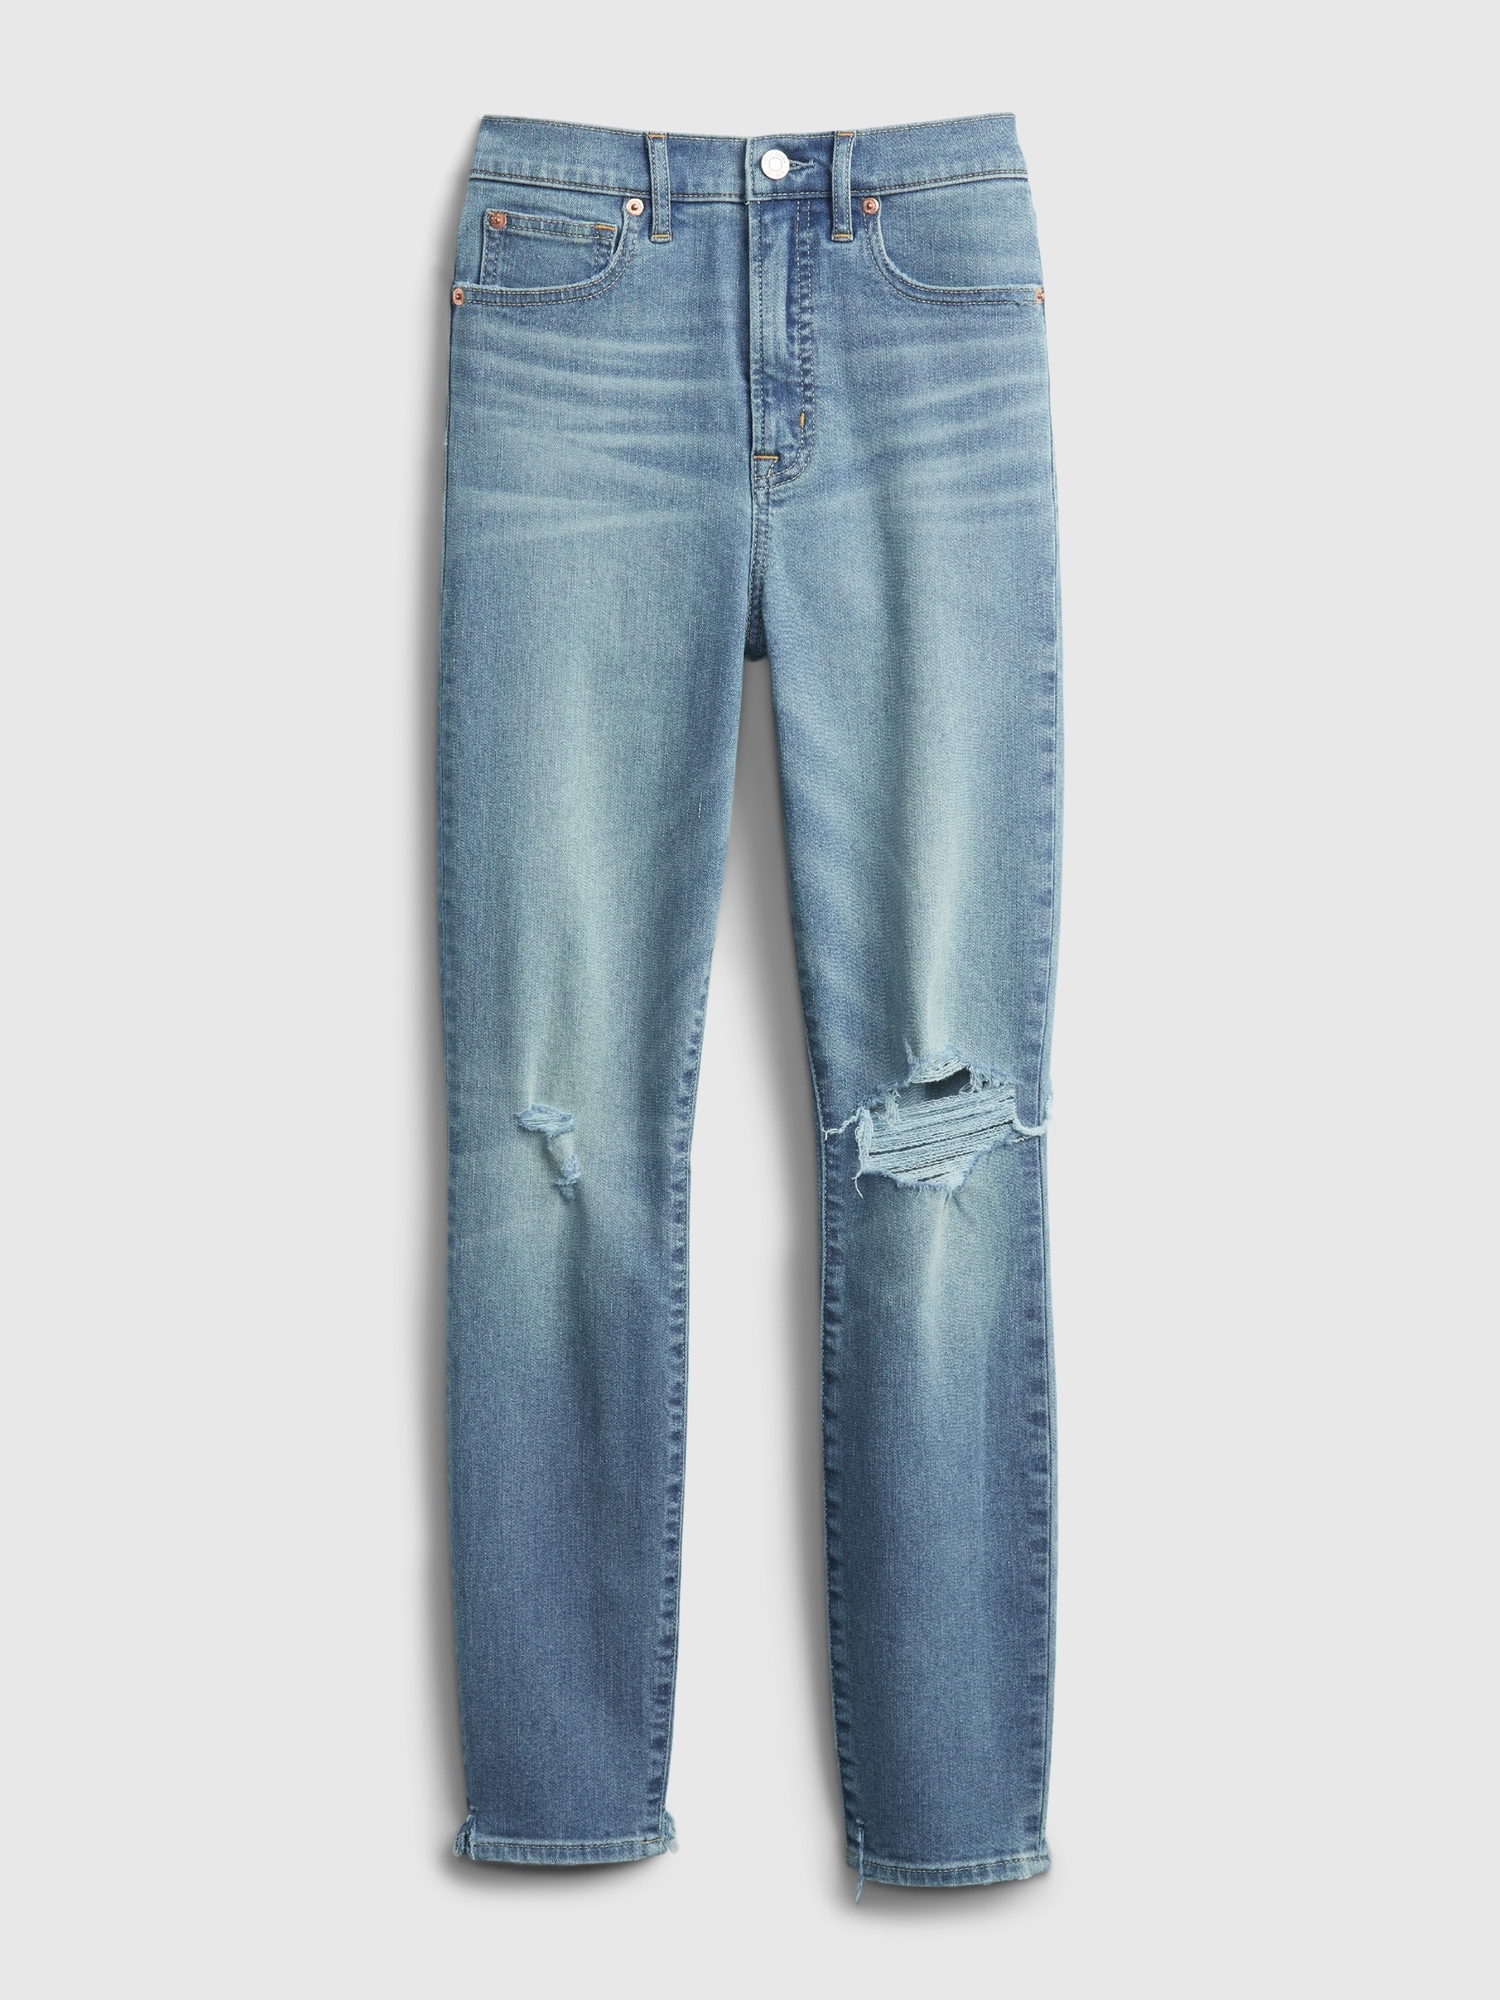 Gap Women's Sky High Rise True Skinny Jeans with Washwell (Medium Destructed)